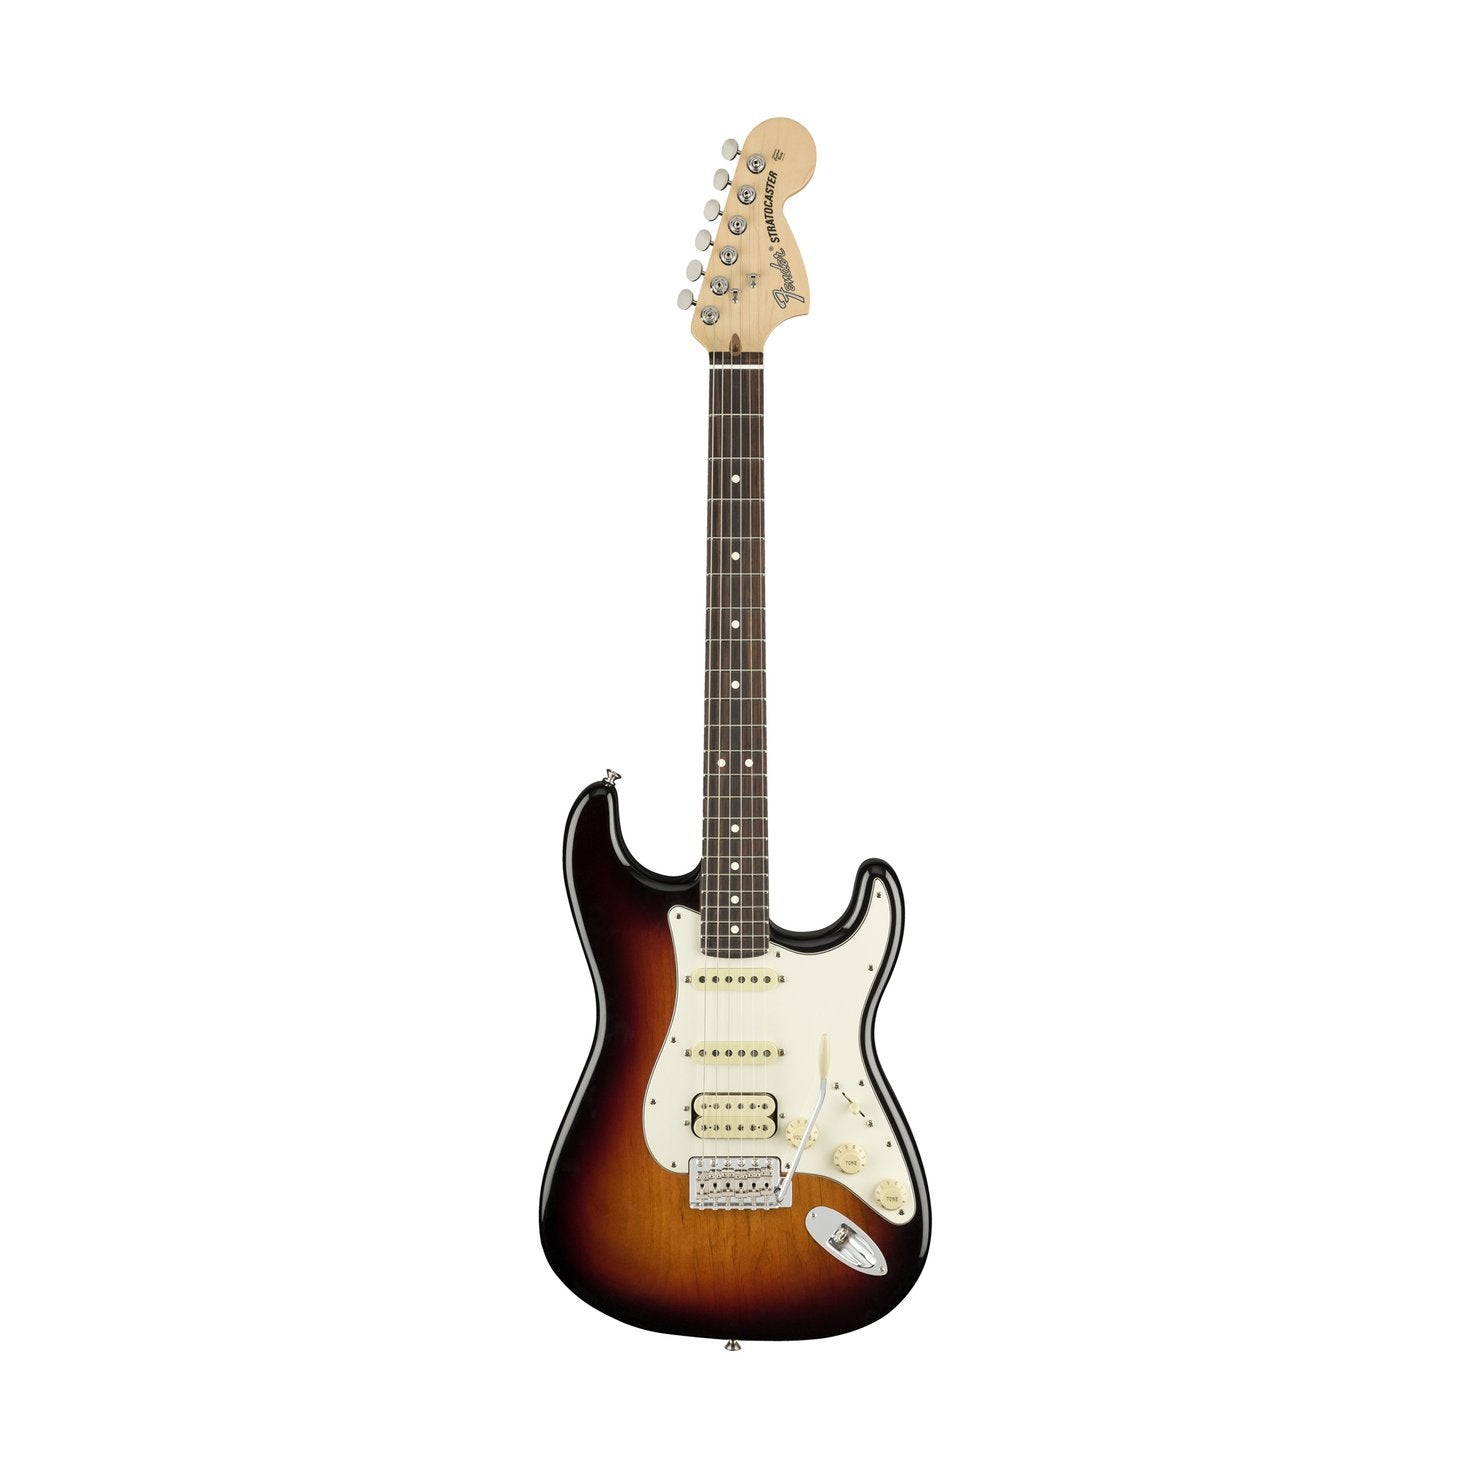 Fender American Performer HSS Stratocaster Electric Guitar, Rosewood FB, 3-Tone Sunburst, FENDER, ELECTRIC GUITAR, fender-electric-guitar-f03-011-4920-300, ZOSO MUSIC SDN BHD